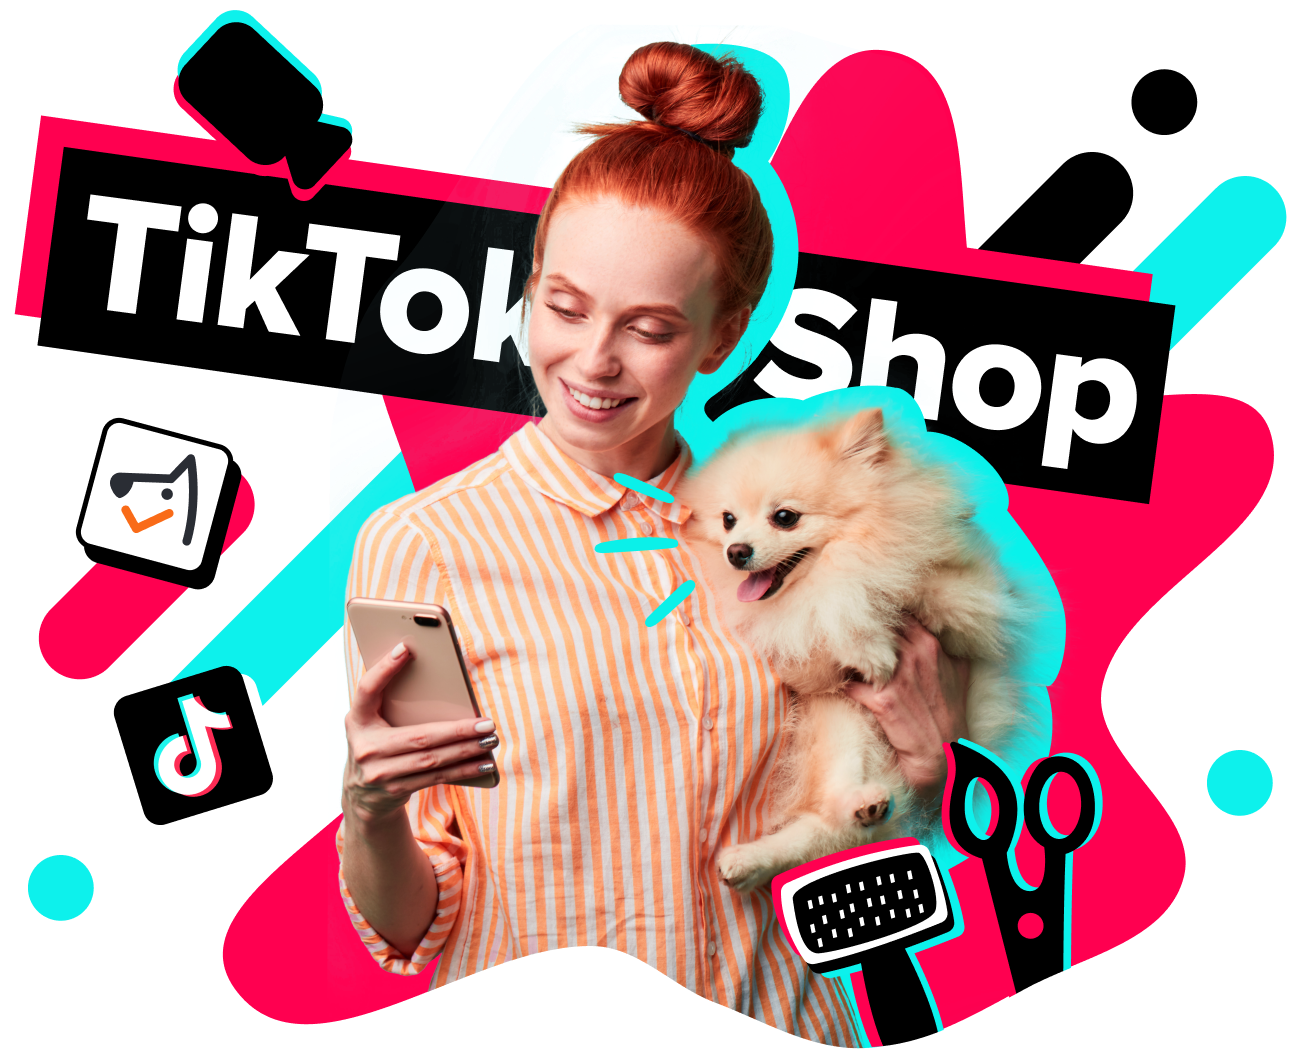 TikTok shop